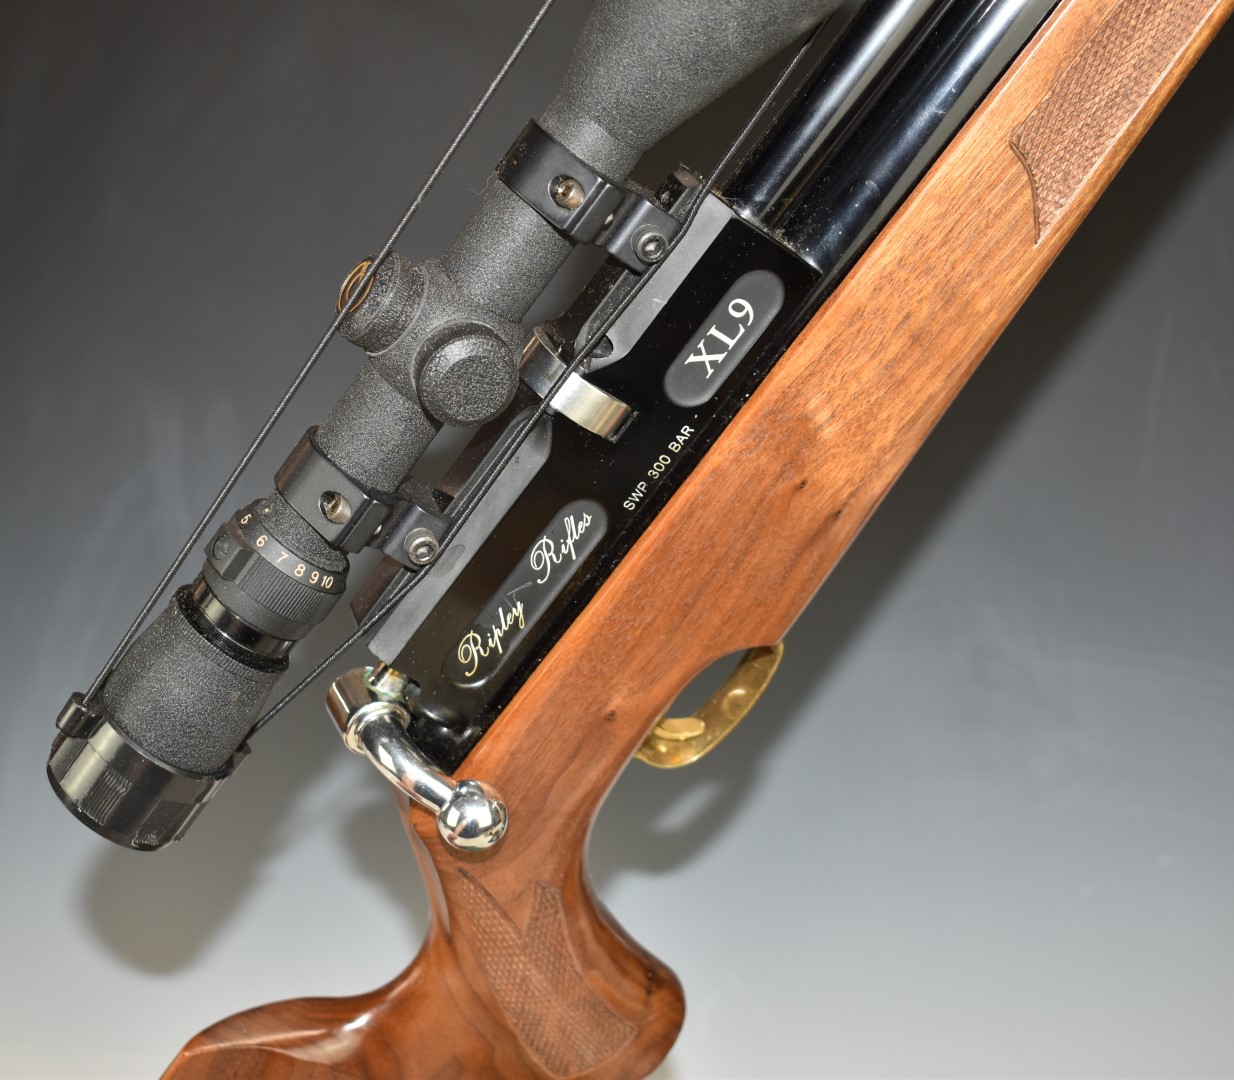 Ripley Rifles XL9 .22 PCP air rifle with nine shot magazine, chequered semi-pistol grip and